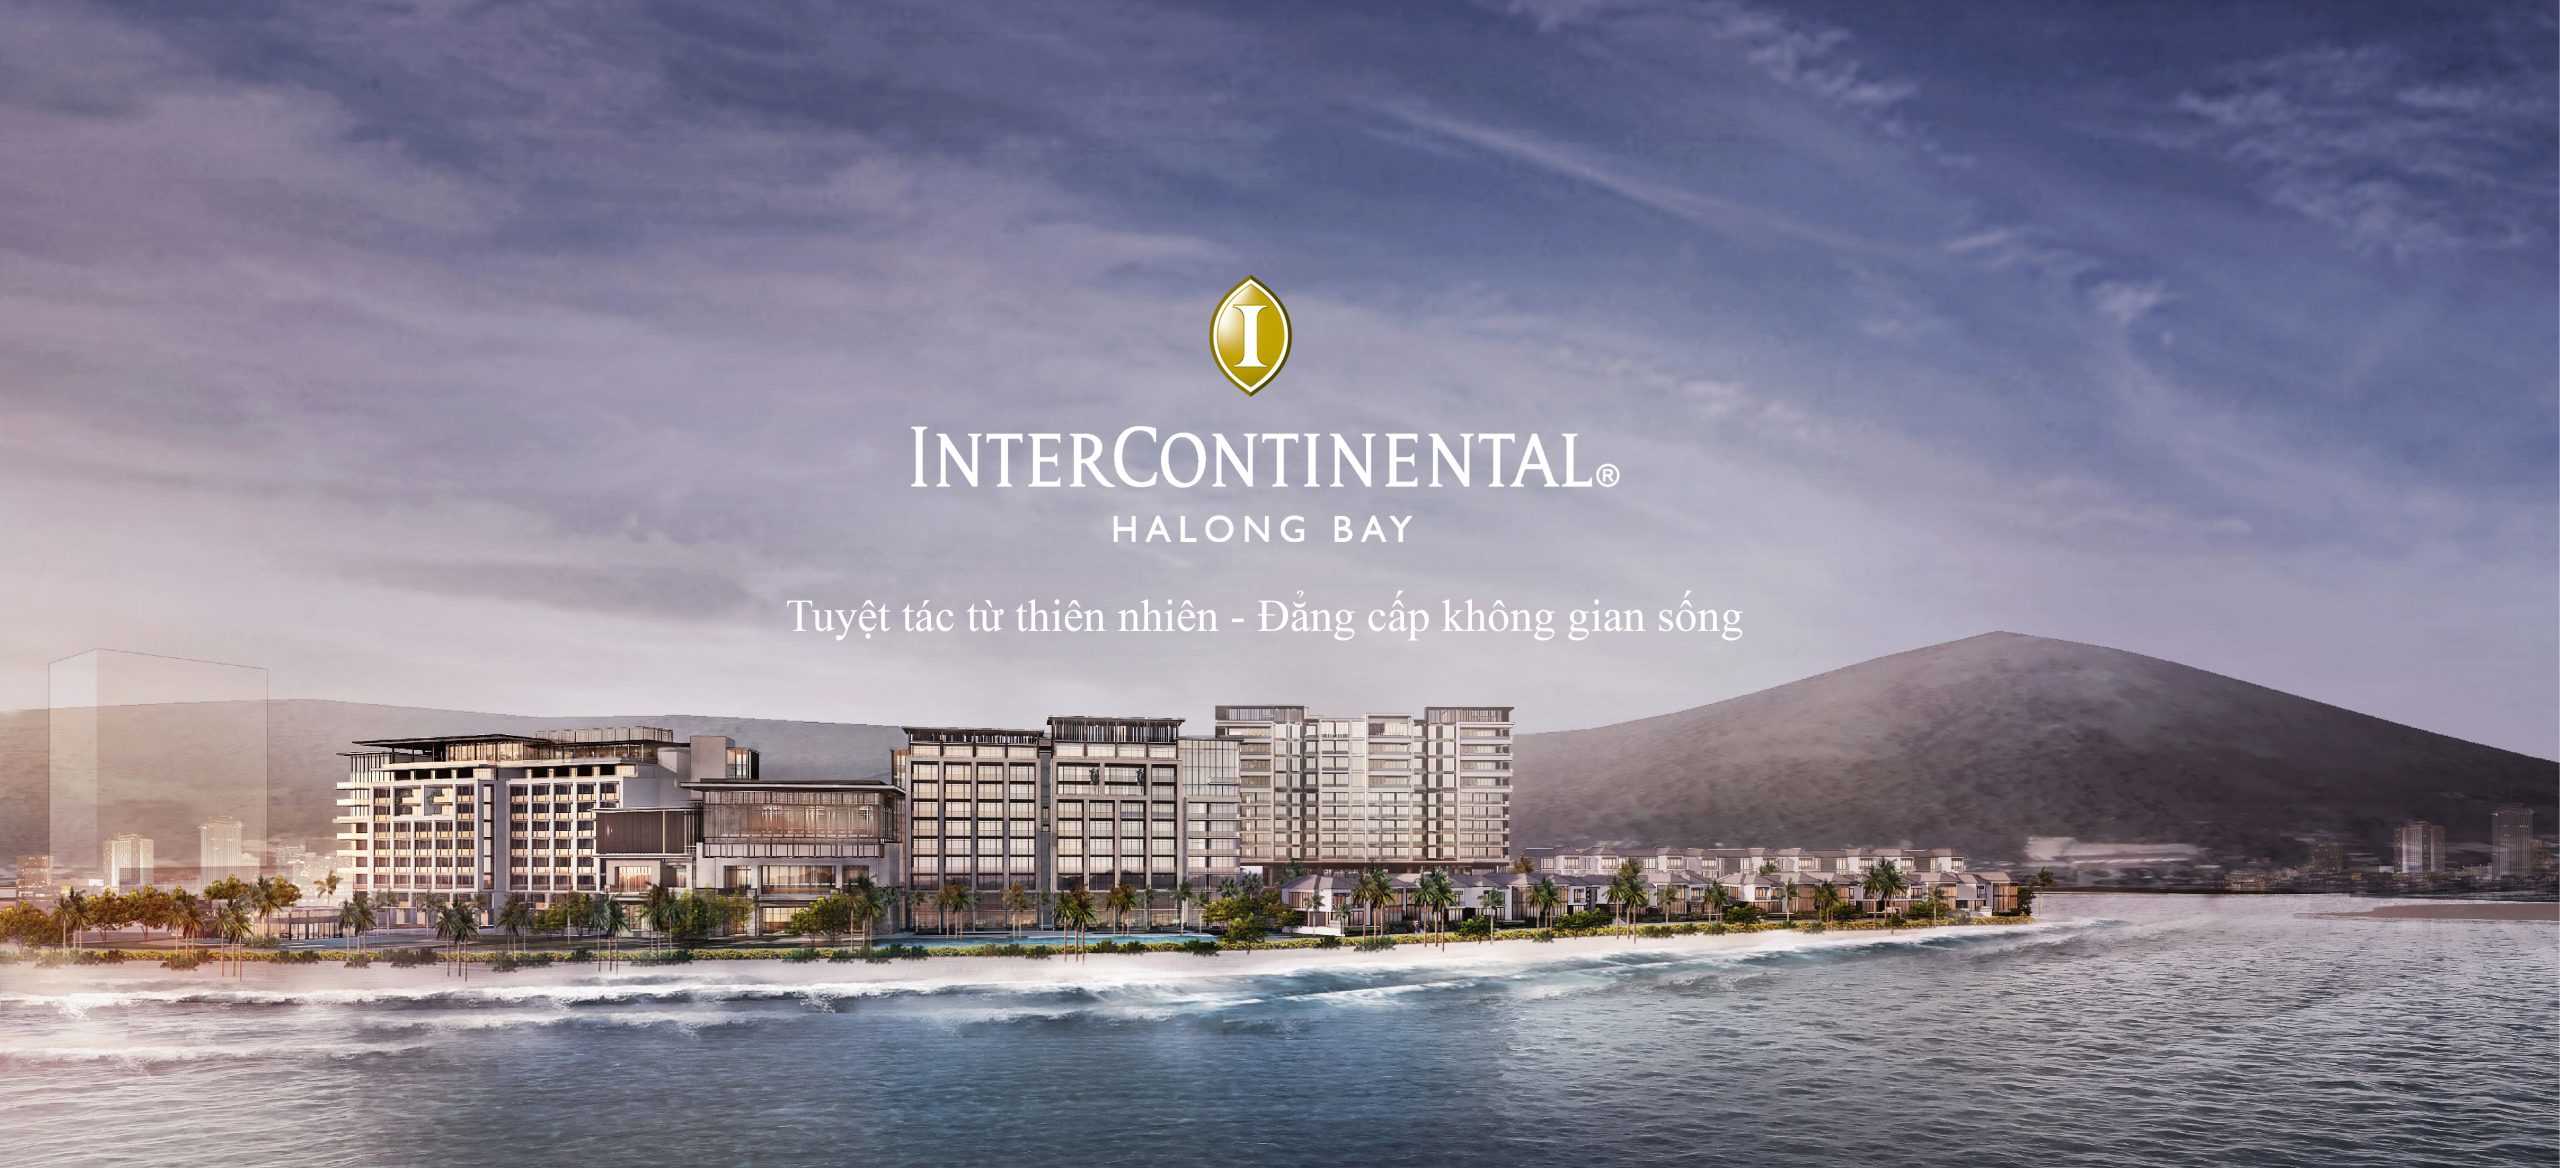 intercontinental-ha-long-bay-chuoi-tien-ich-nghi-duong